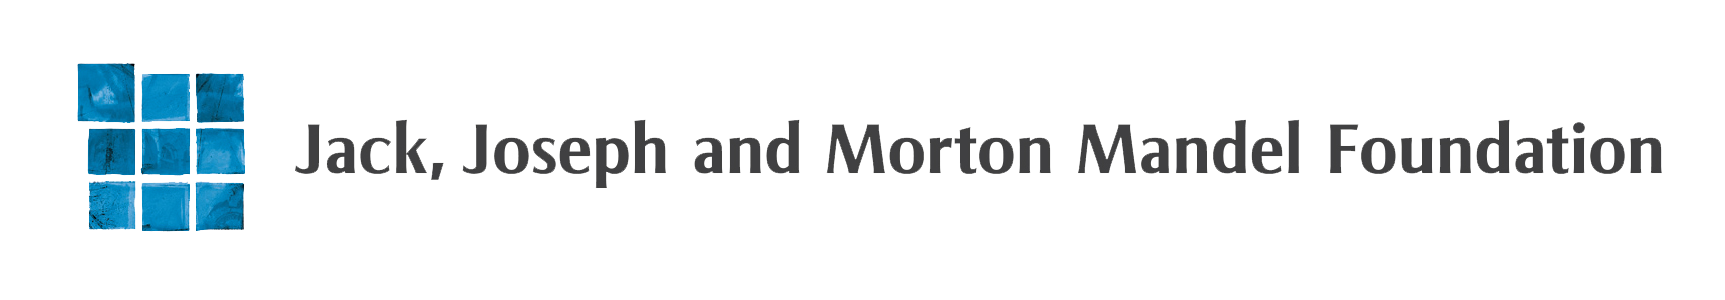 Mandel Foundation Logo